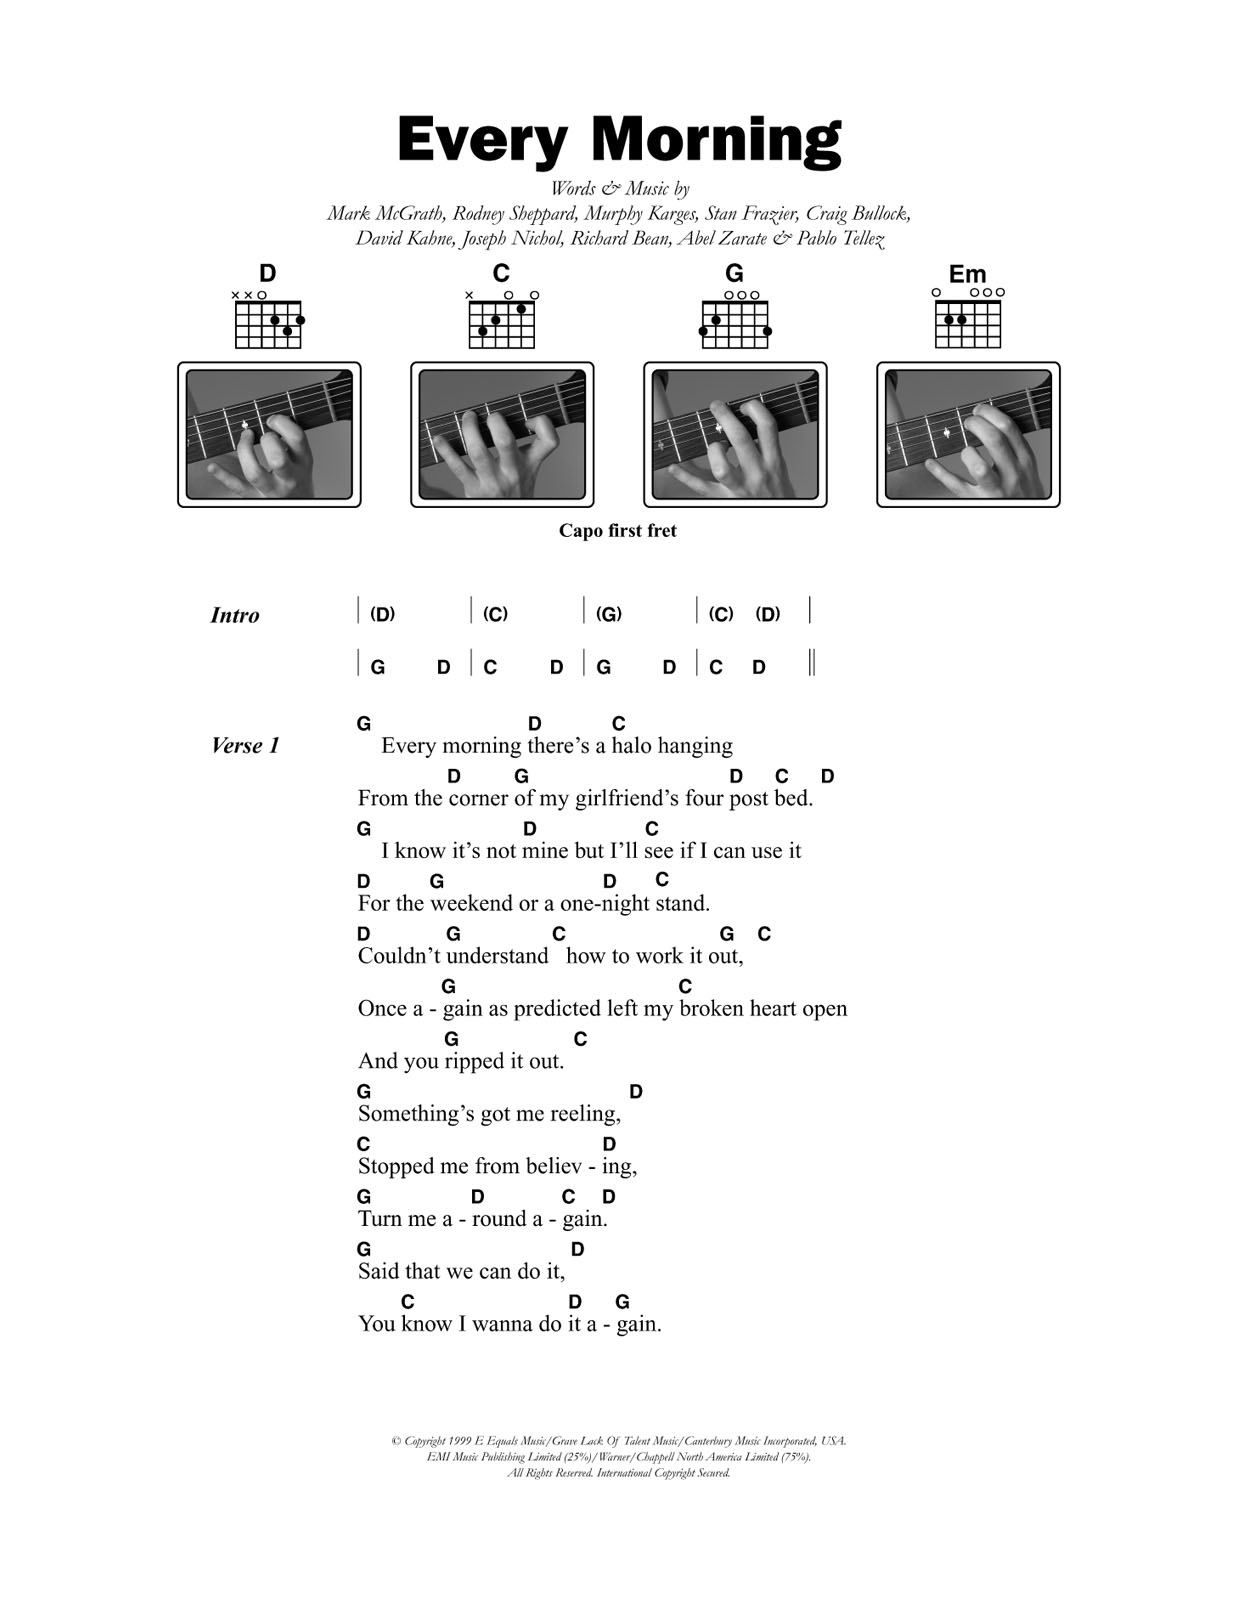 Sugar Ray Every Morning Sheet Music Notes & Chords for Real Book – Melody, Lyrics & Chords - Download or Print PDF